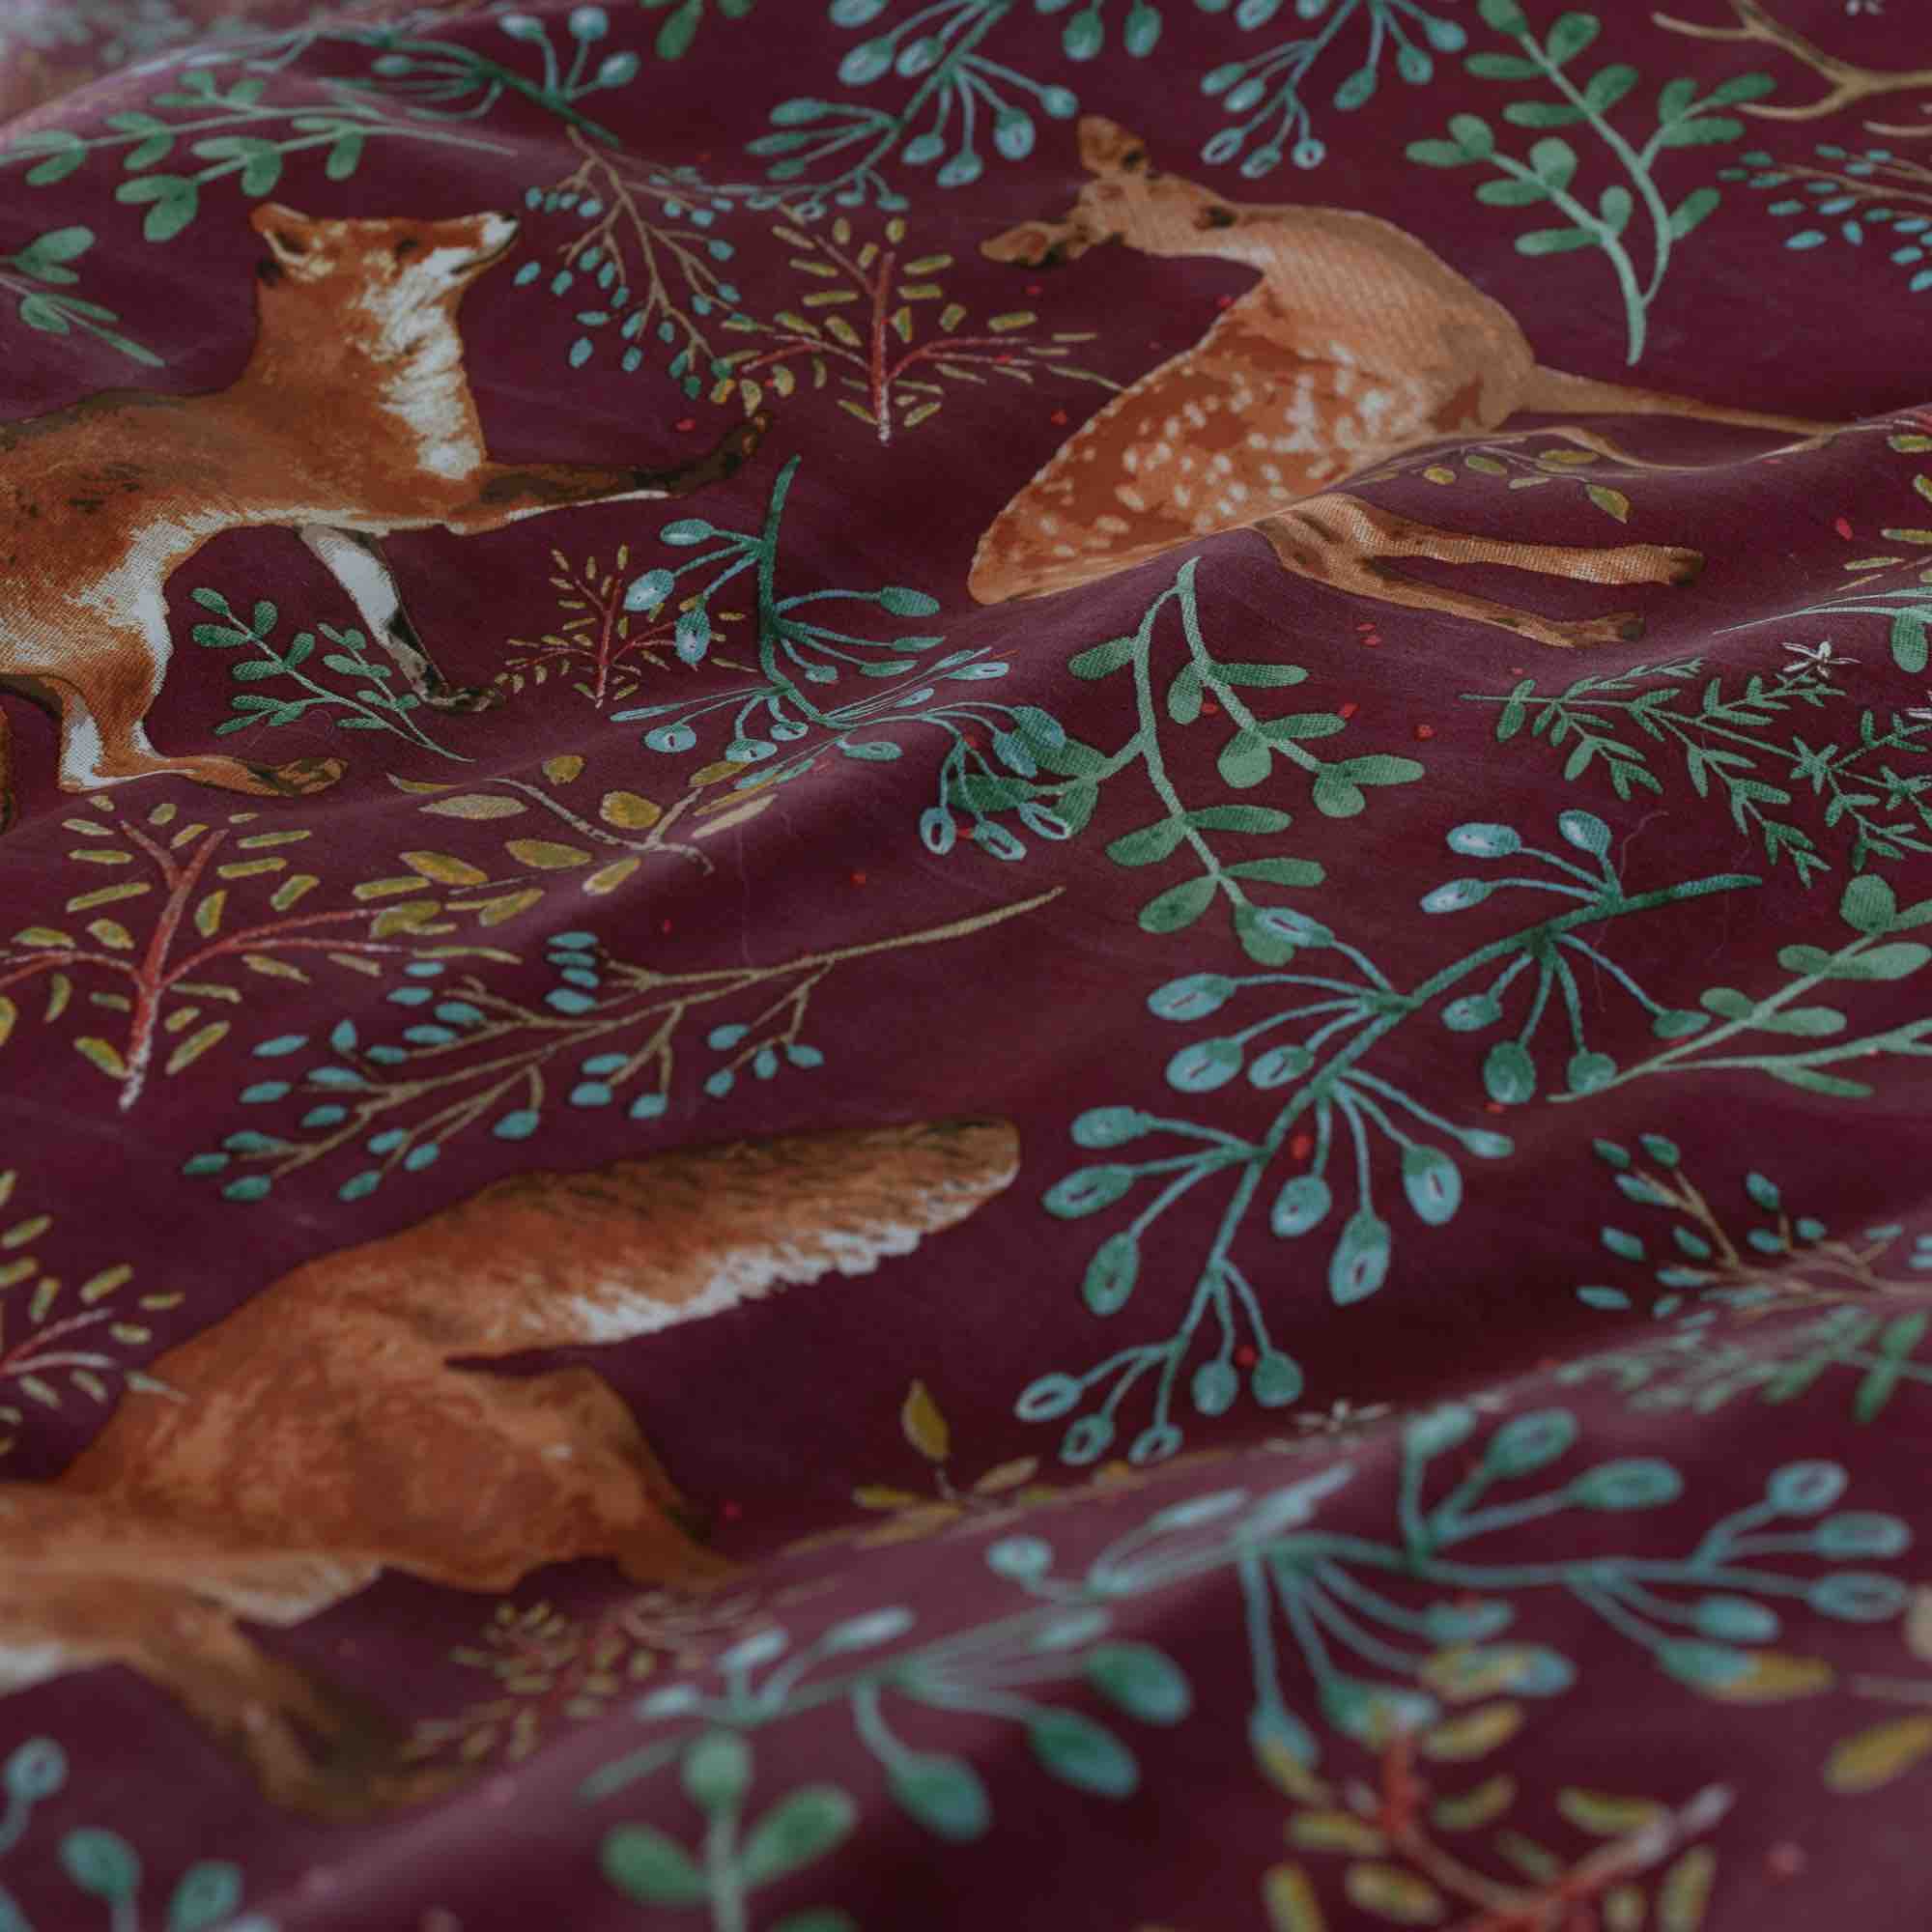 Deyongs 1846 Fox & Deer Duvet Cover Set - Mulberry